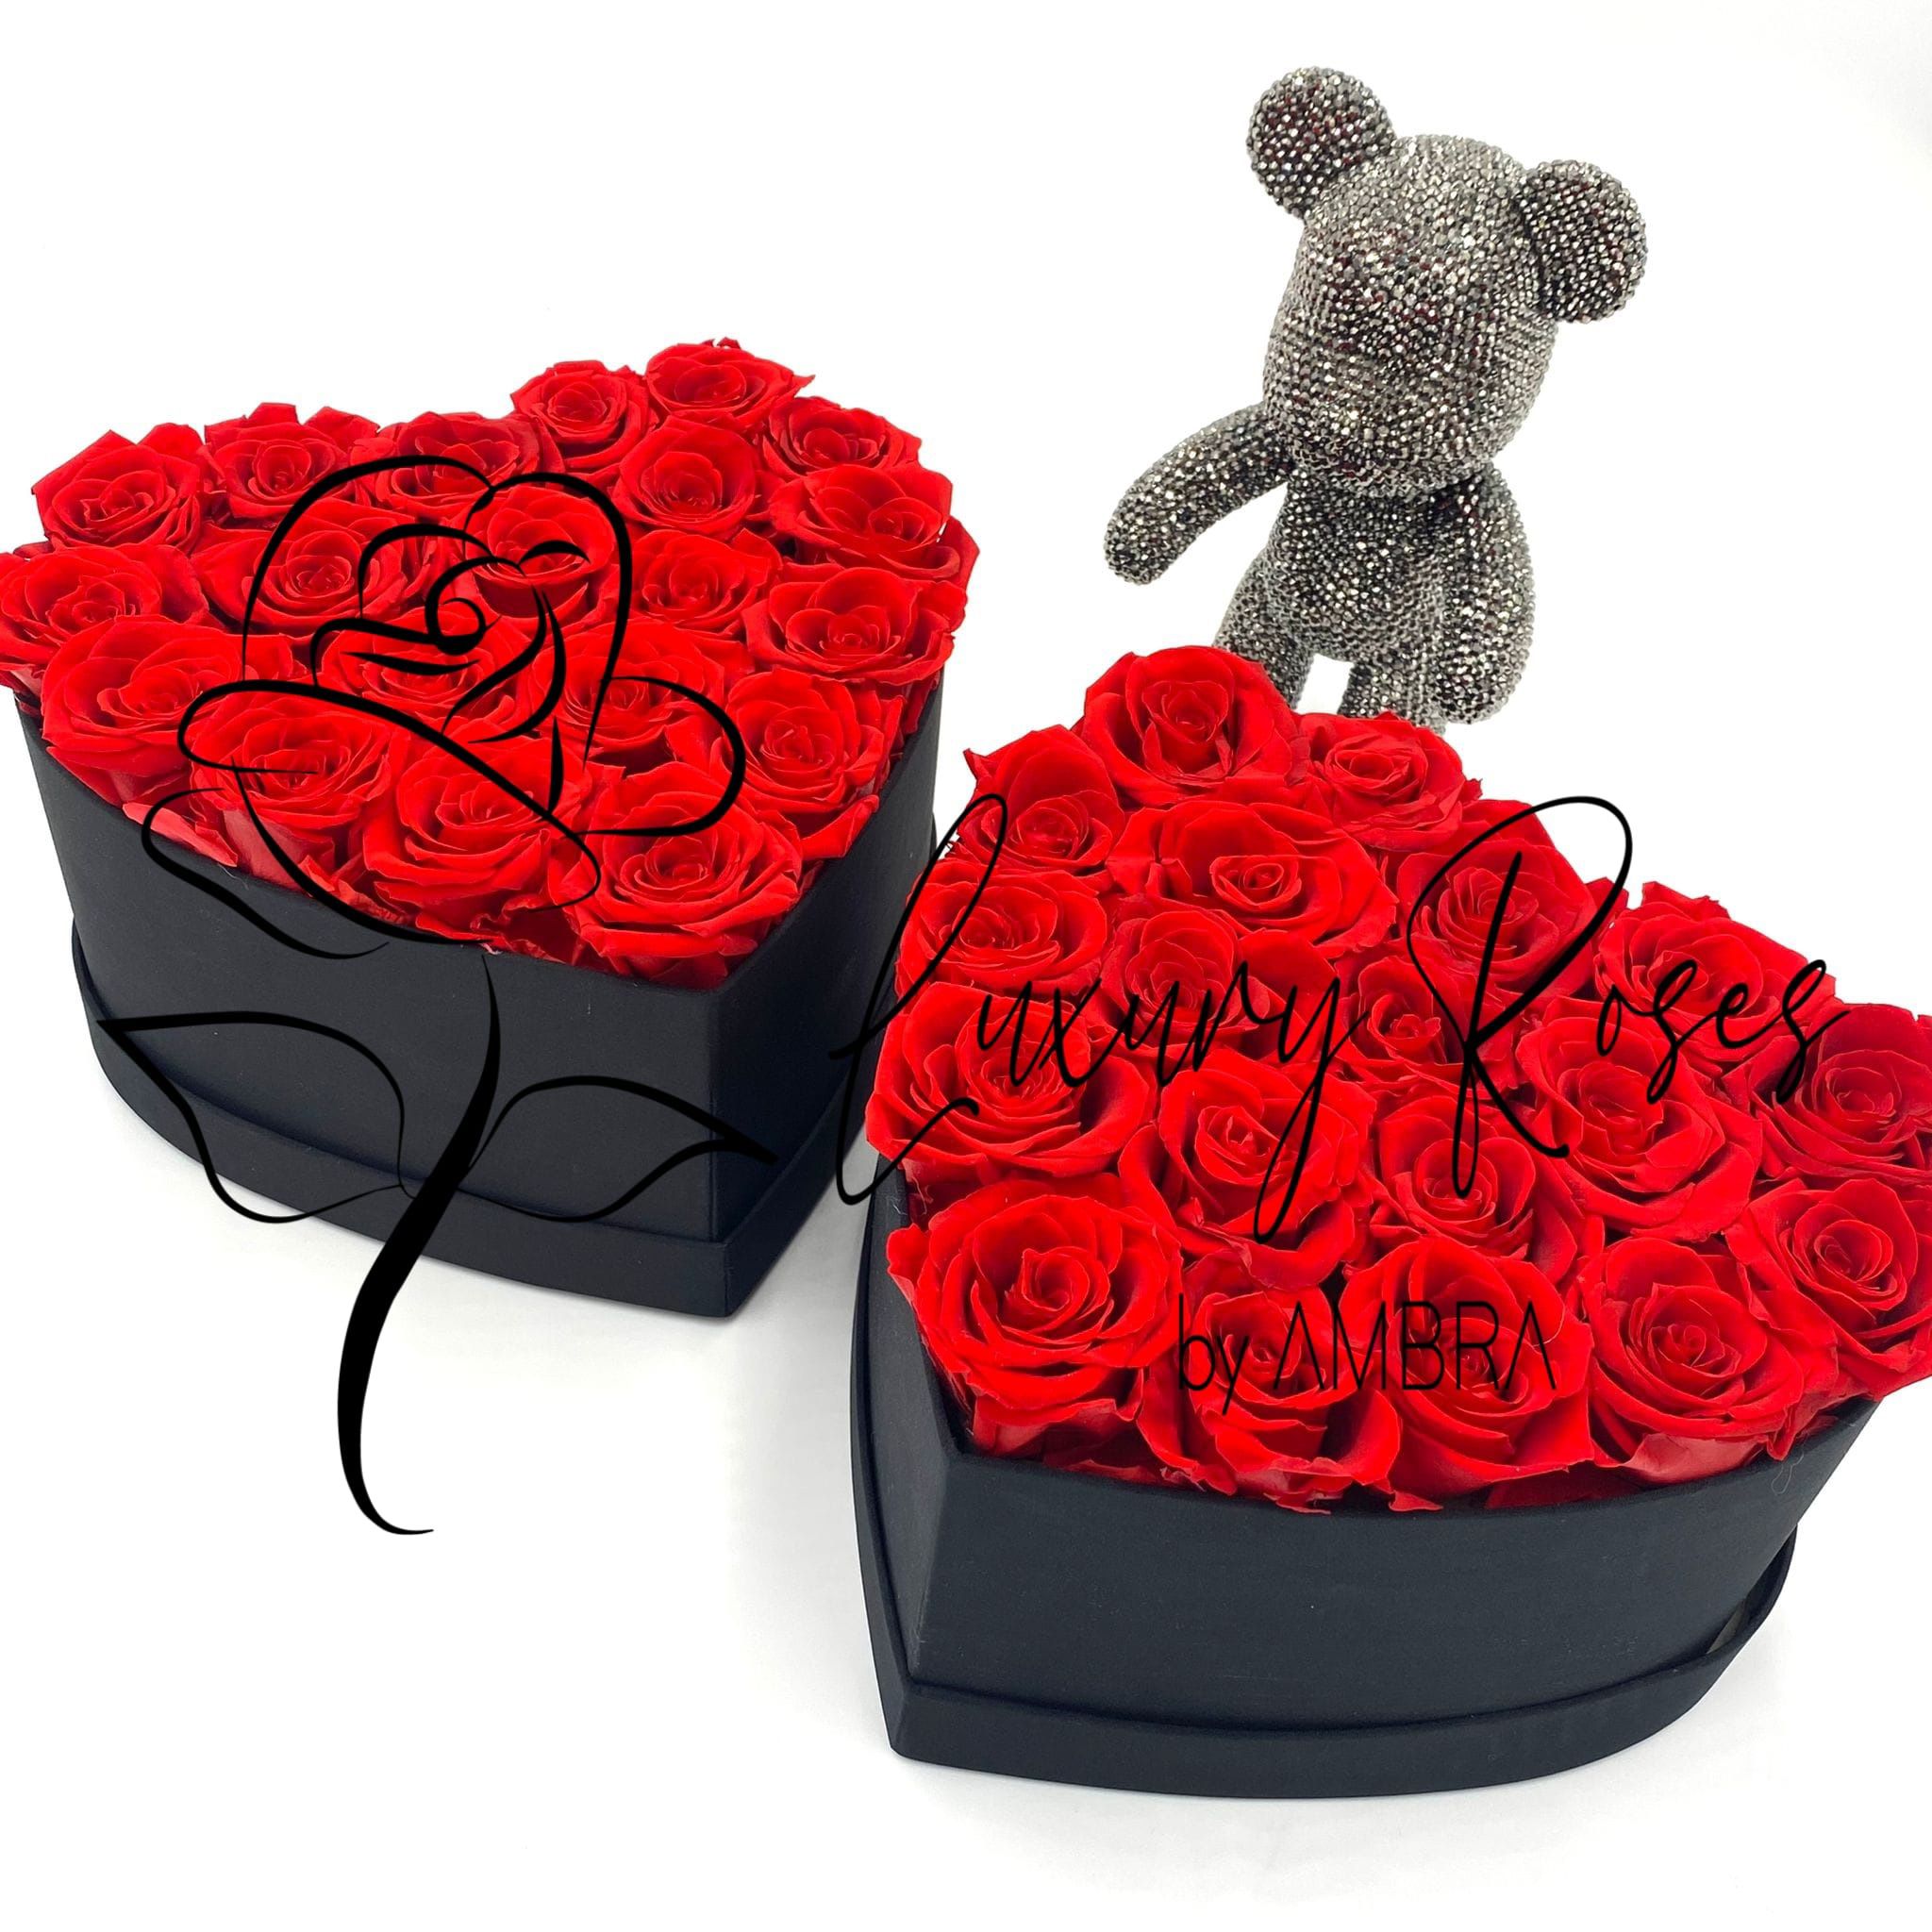 Red Eternal Roses Heart Shape Box Roses Lasting Preserved Flowers Bday Anniversary Gift Present immortal Roses long lasting 